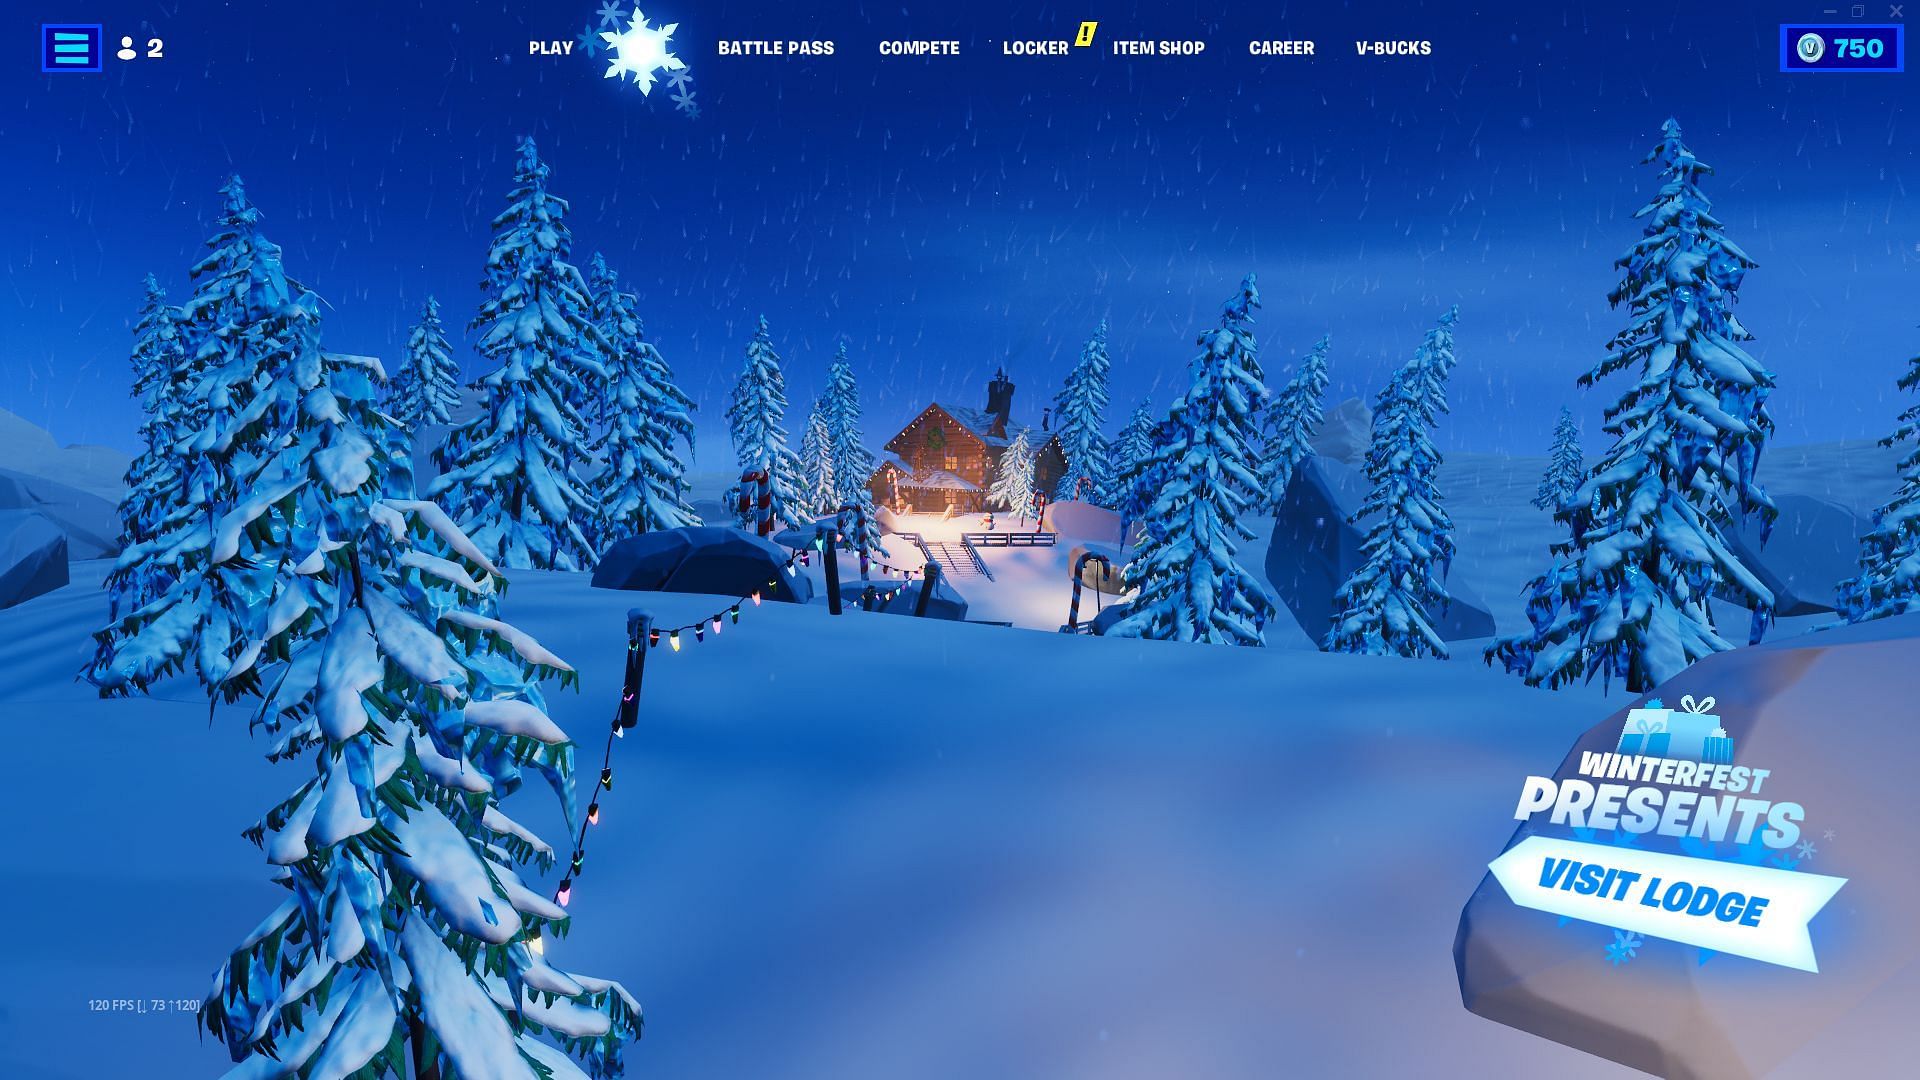 Players need to visit Cozy Lodge from the Fortnite Winterfest menu (Image via Sportskeeda)